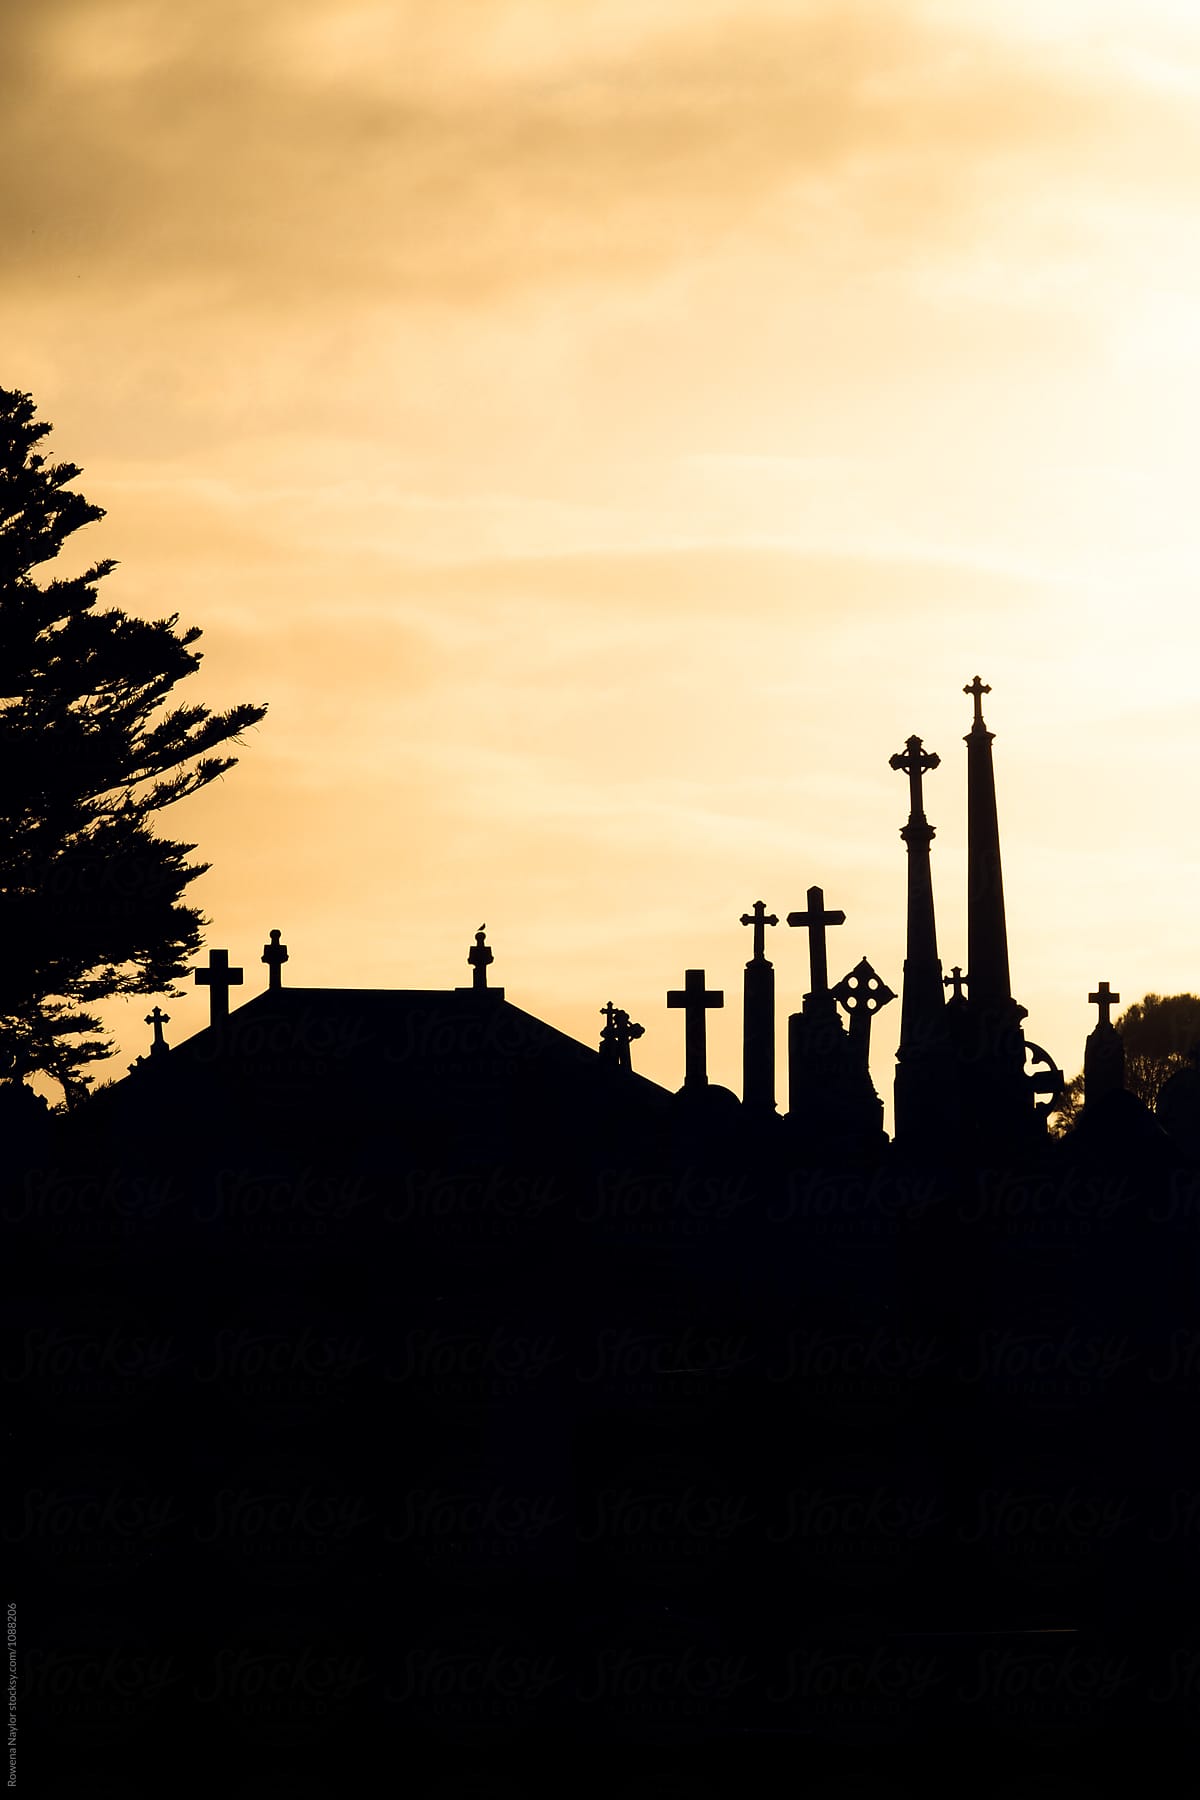 Silouette of catholic gravestones in cemetery